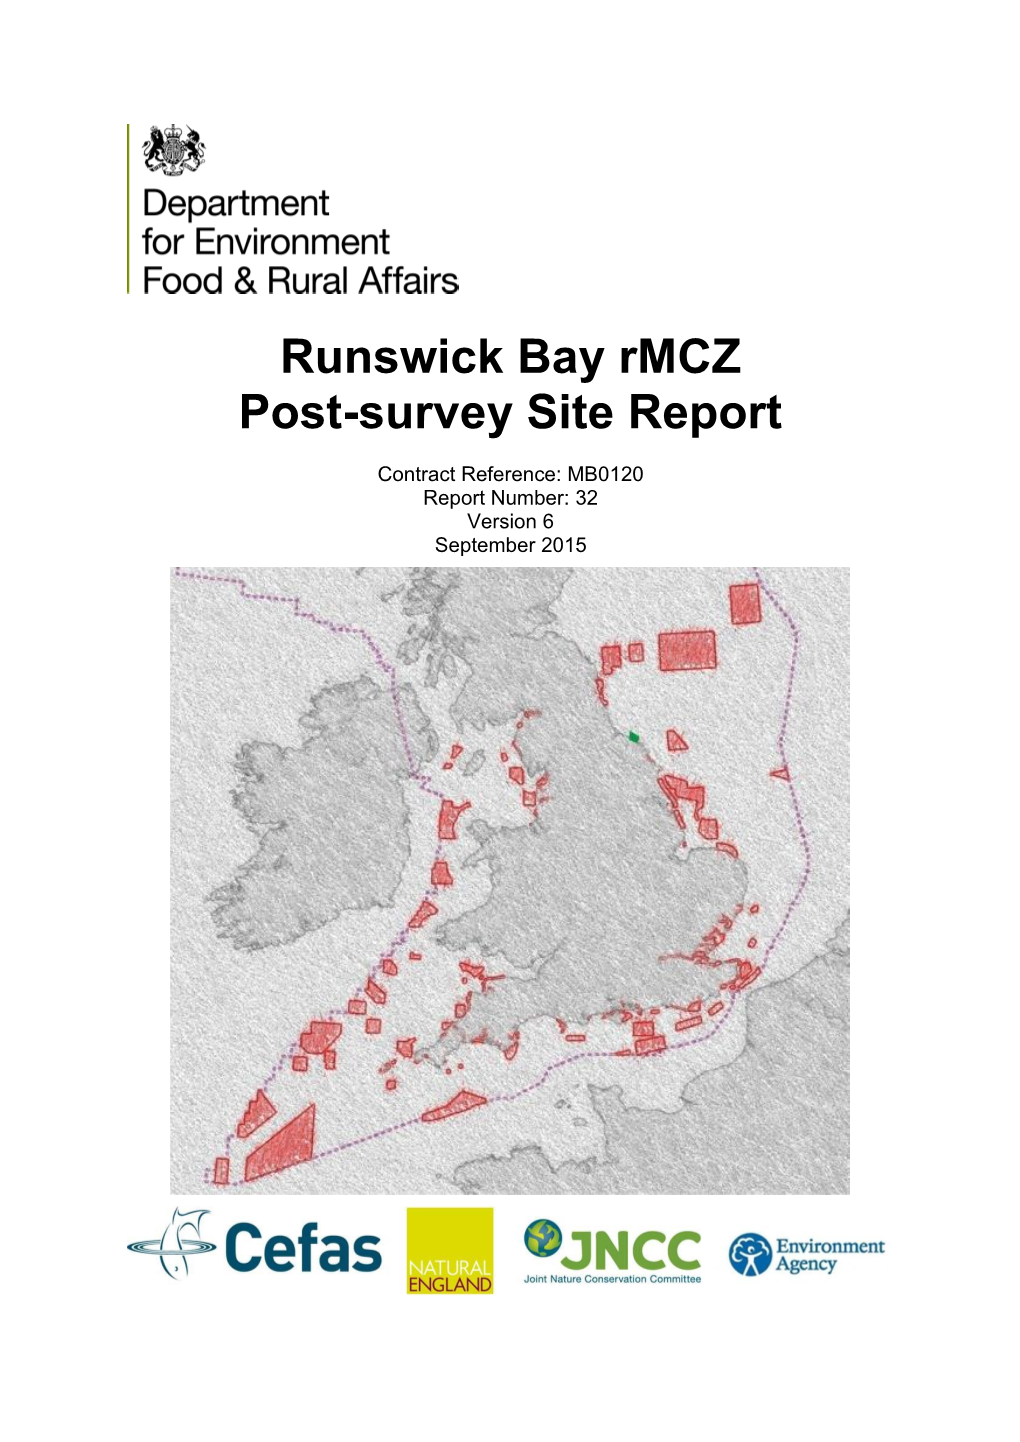 Runswick Bay Rmcz Post-Survey Site Report